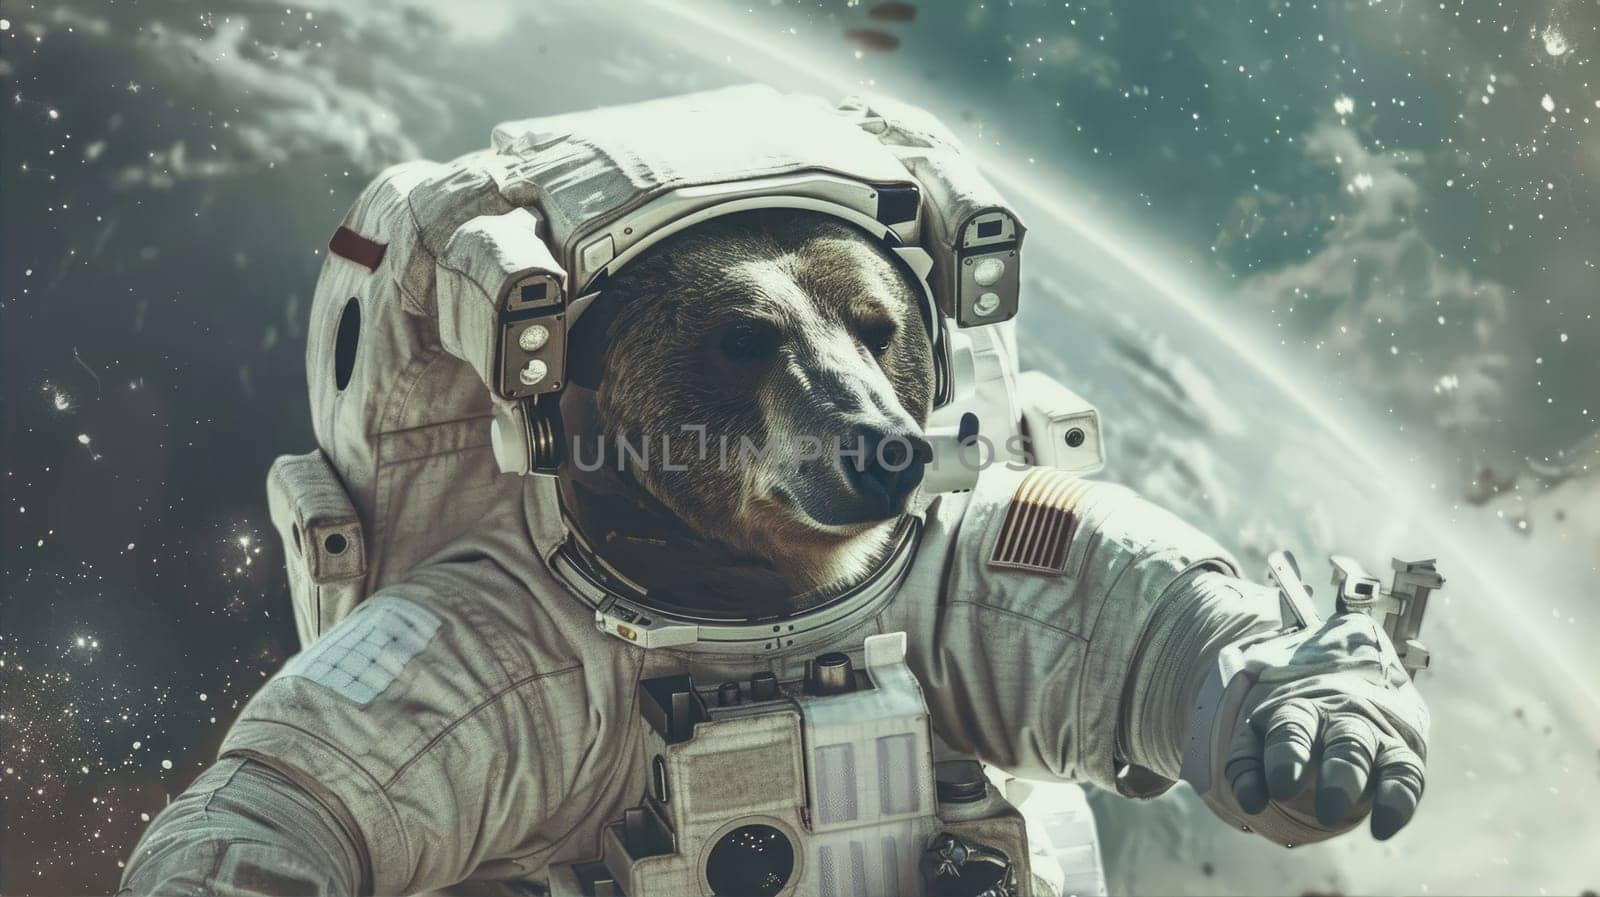 A bear travels through space like an astronaut AI